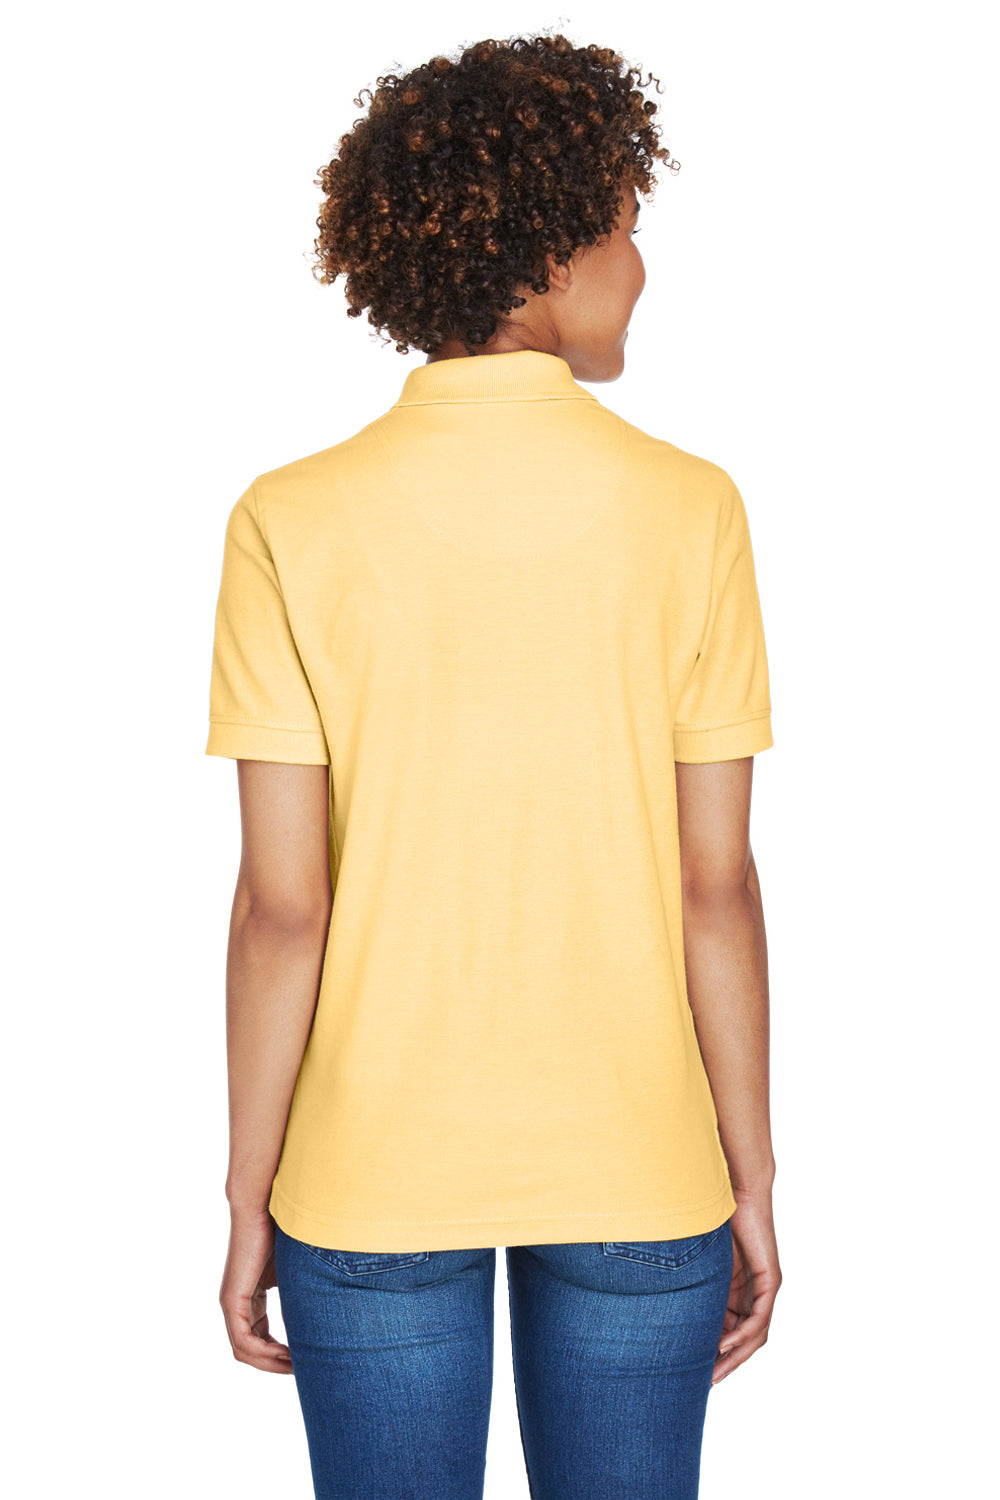 UltraClub 8541 Womens Whisper Short Sleeve Polo Shirt Yellow Back